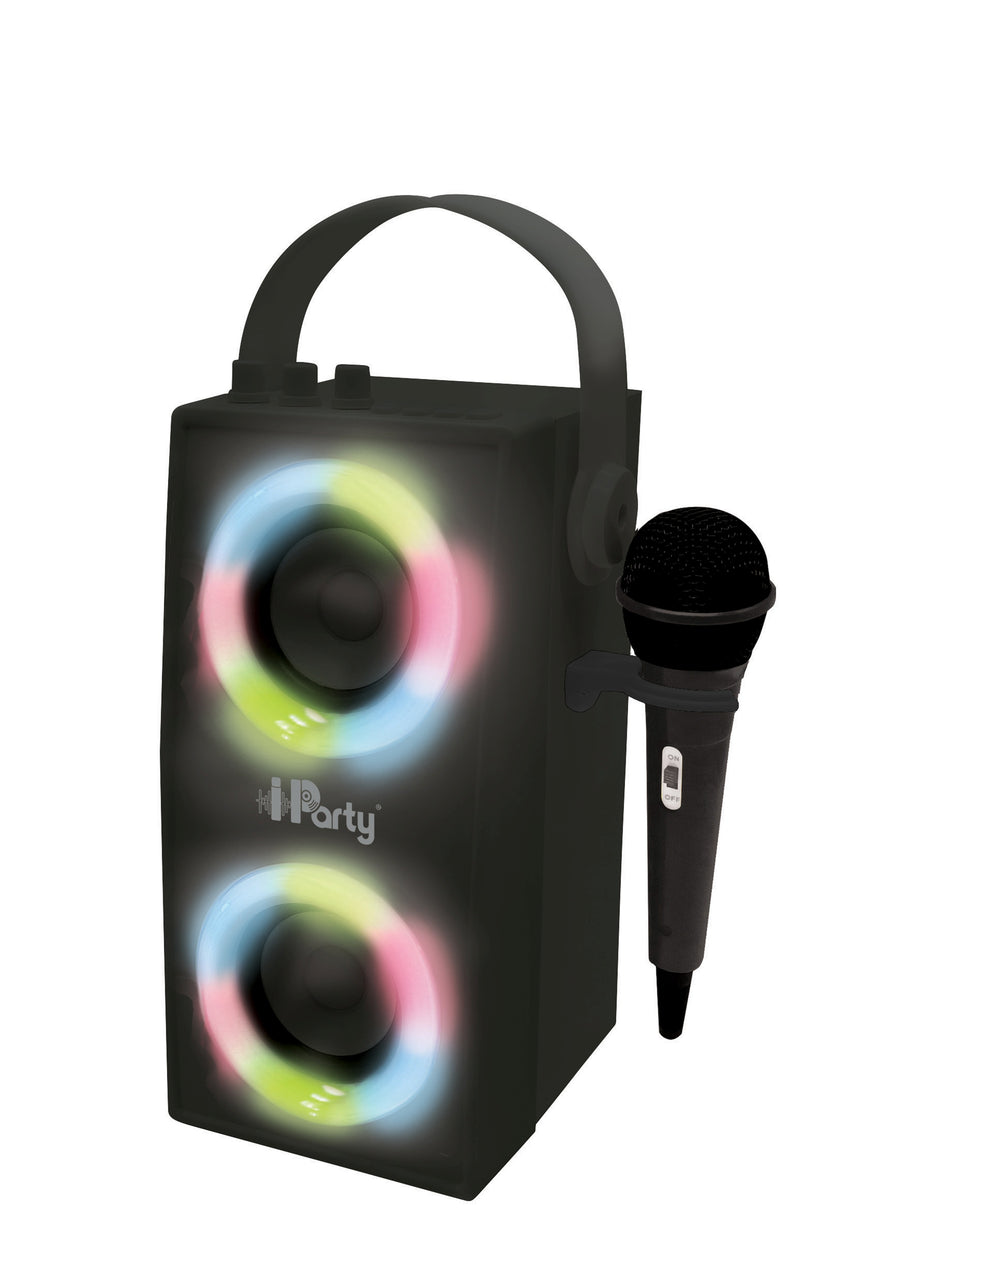 Lexibook Portable Bluetooth Speaker with Karaoke Microphone - Black